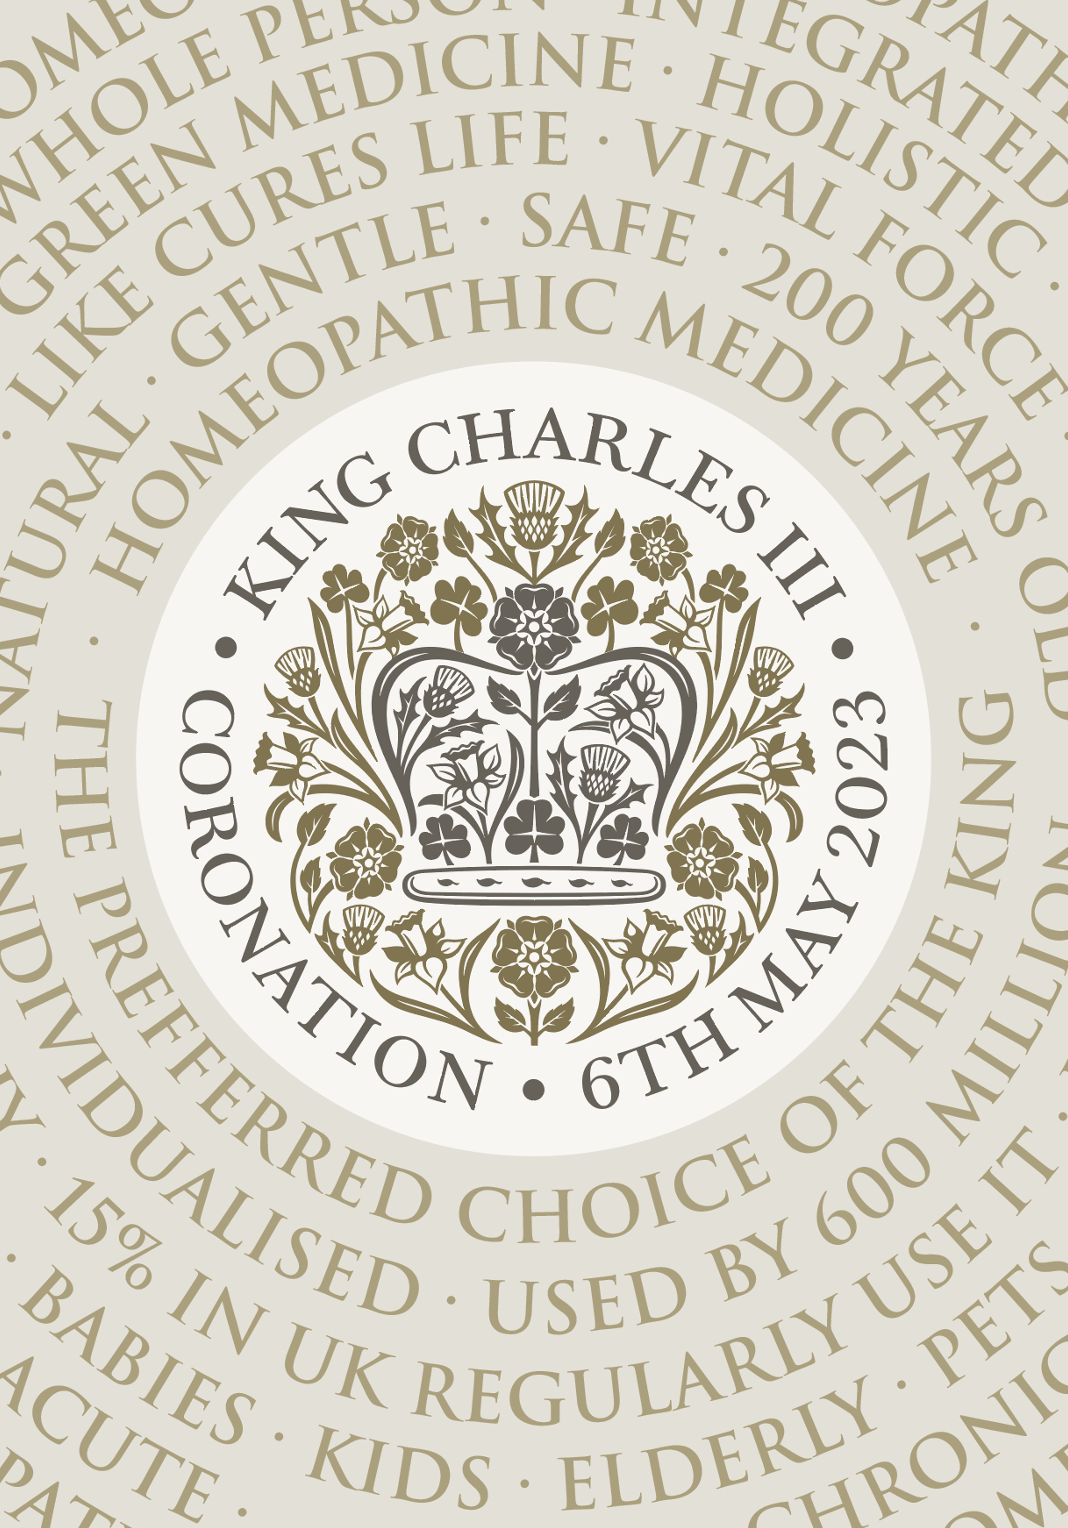 King Charles III Coronation